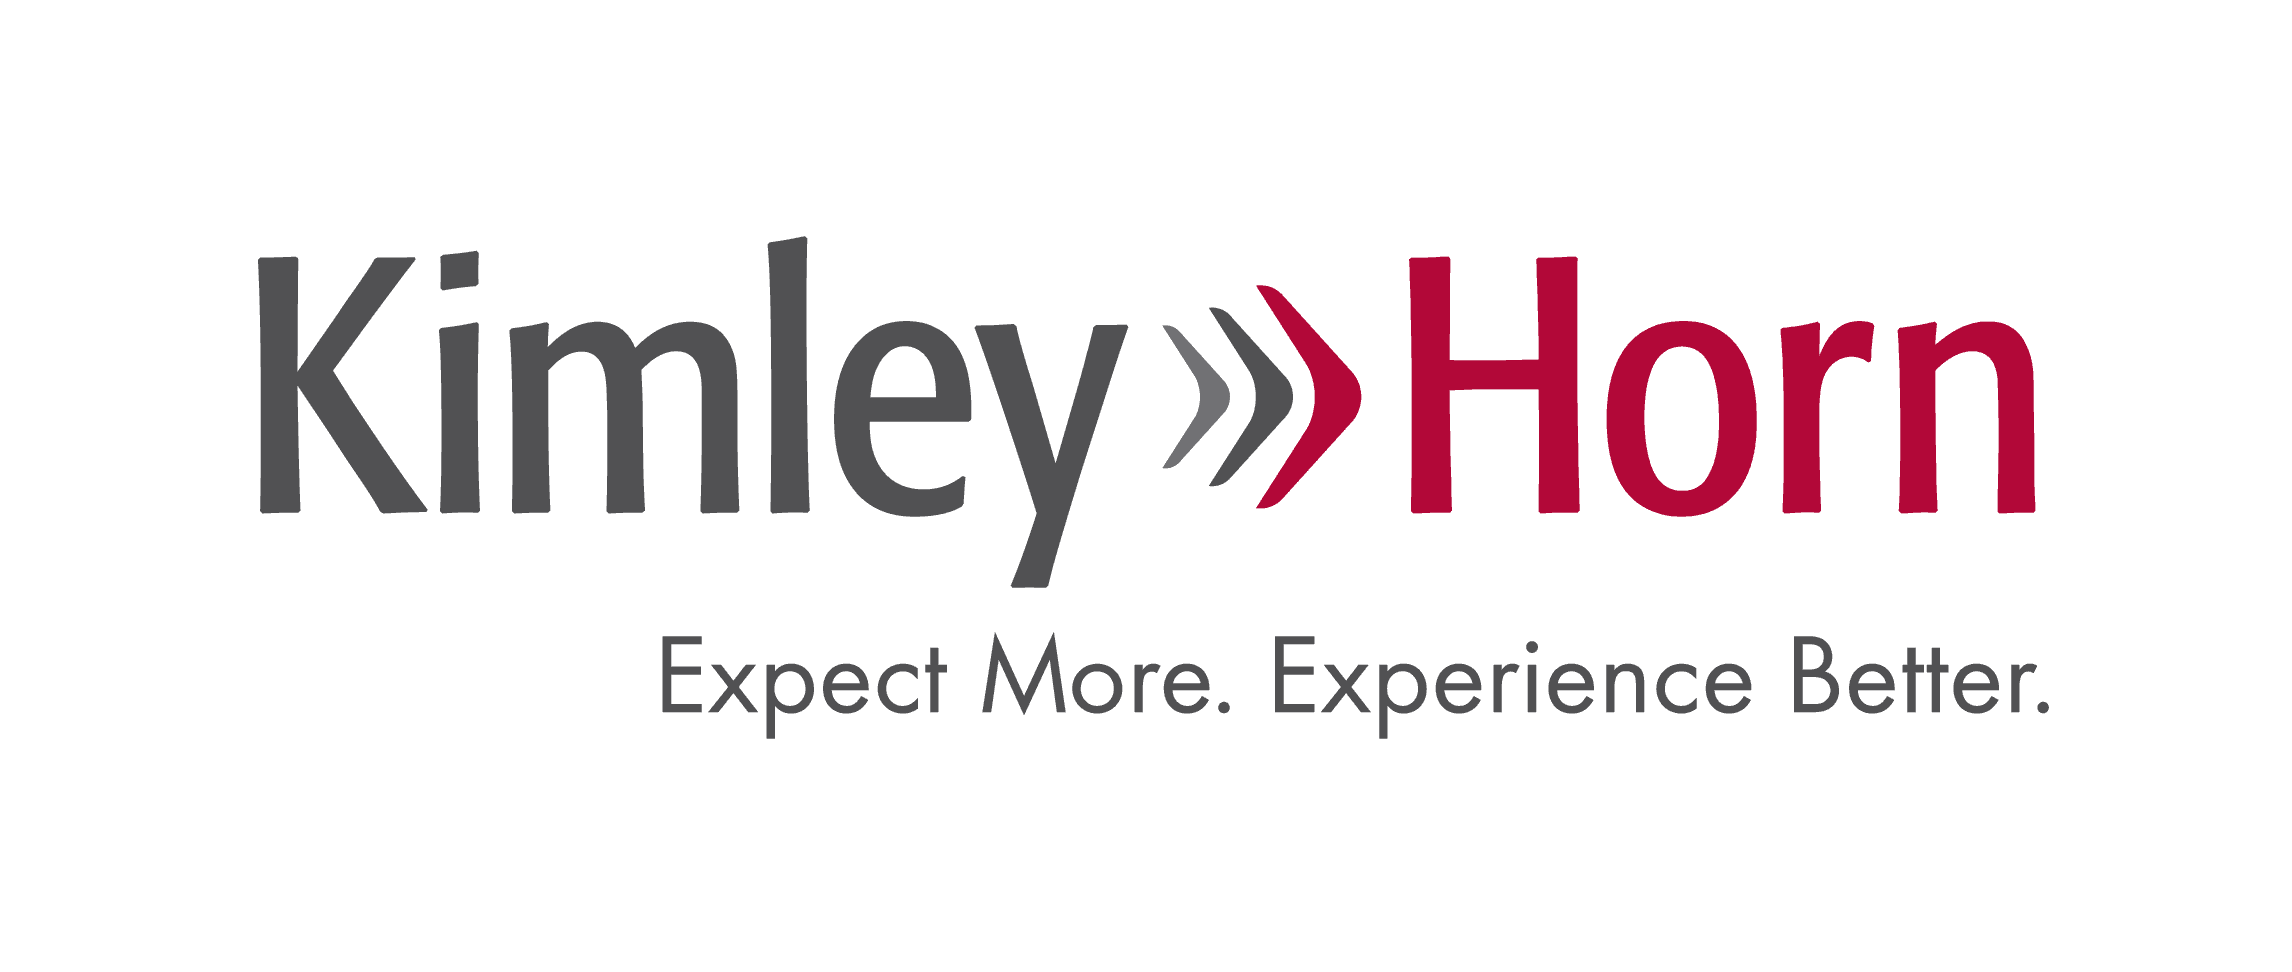 Kimley horn logo